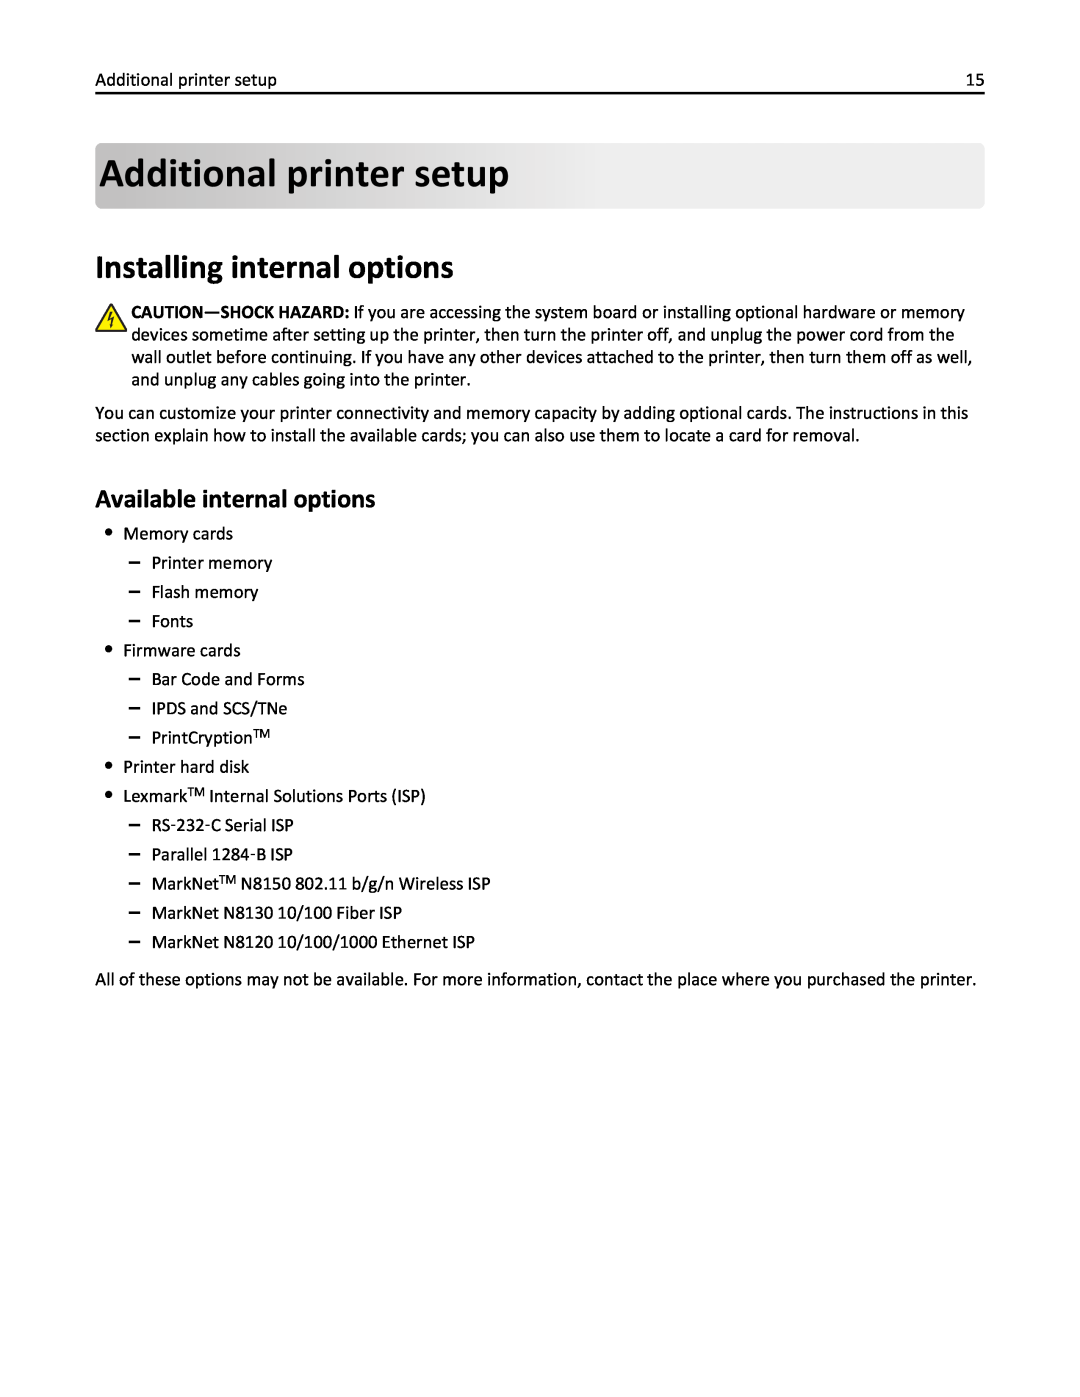 Lexmark 110, W850DN, 19Z0301 manual Additional printer setup, Installing internal options, Available internal options 